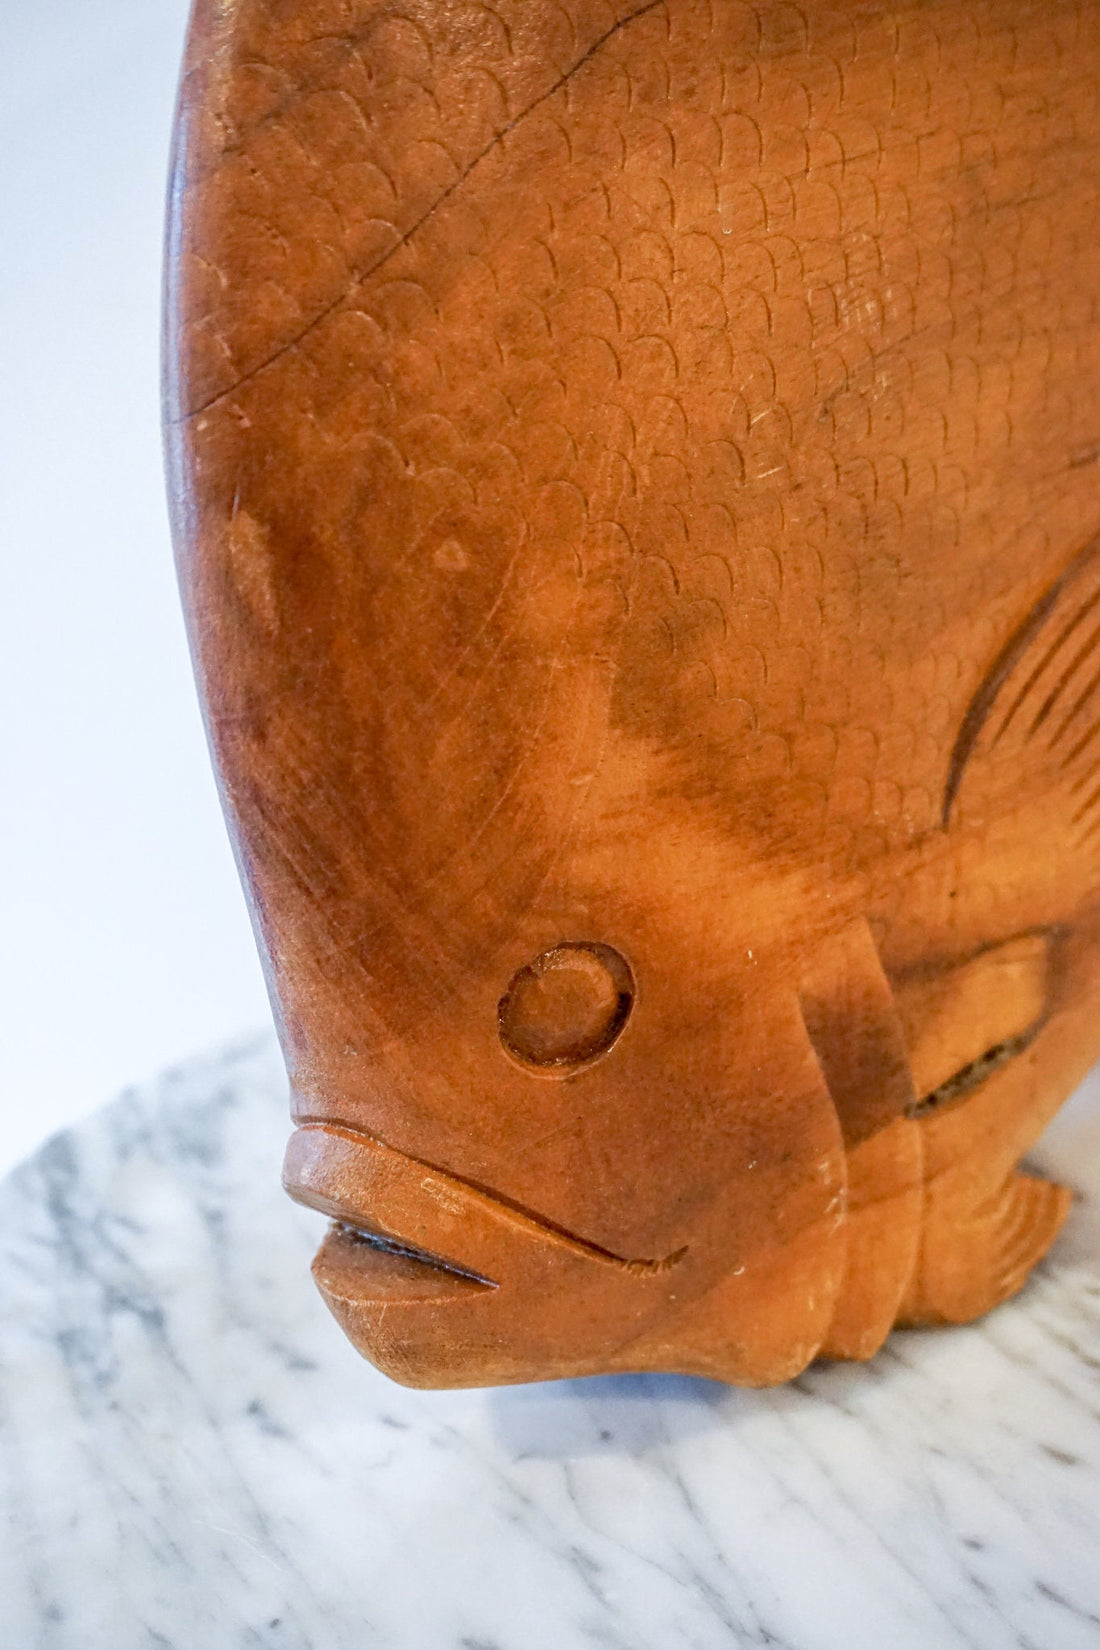 Carved Wood Fish Sculpture Statue Figurine